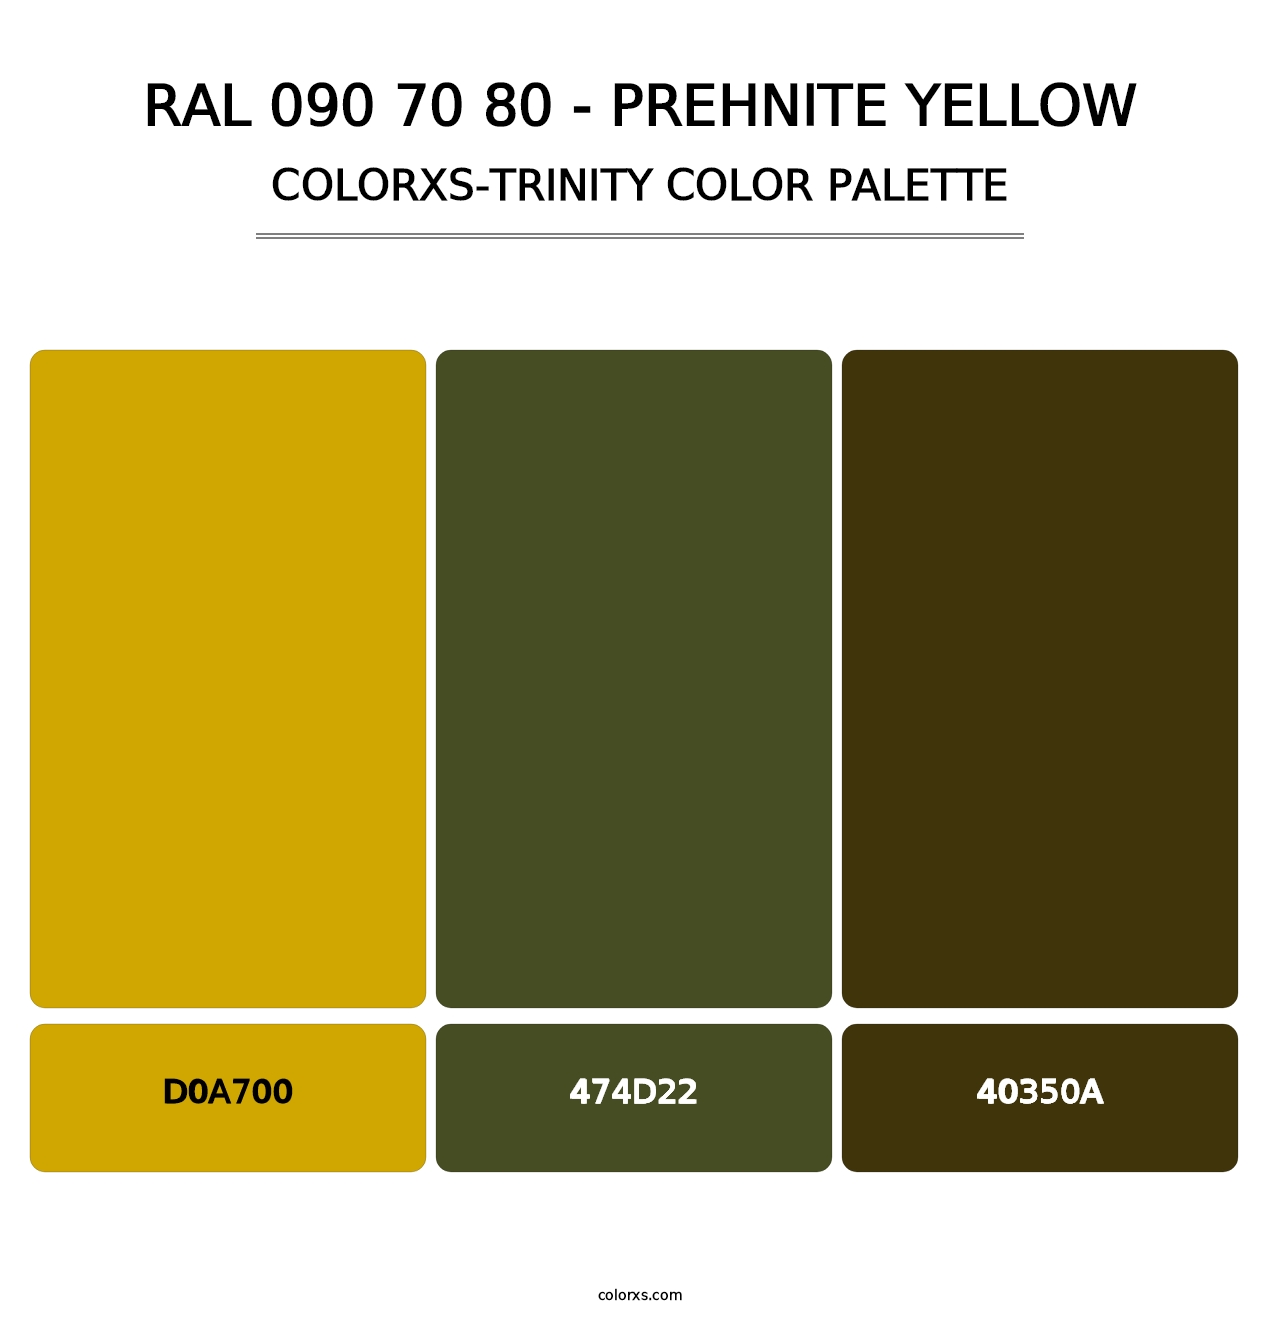 RAL 090 70 80 - Prehnite Yellow - Colorxs Trinity Palette